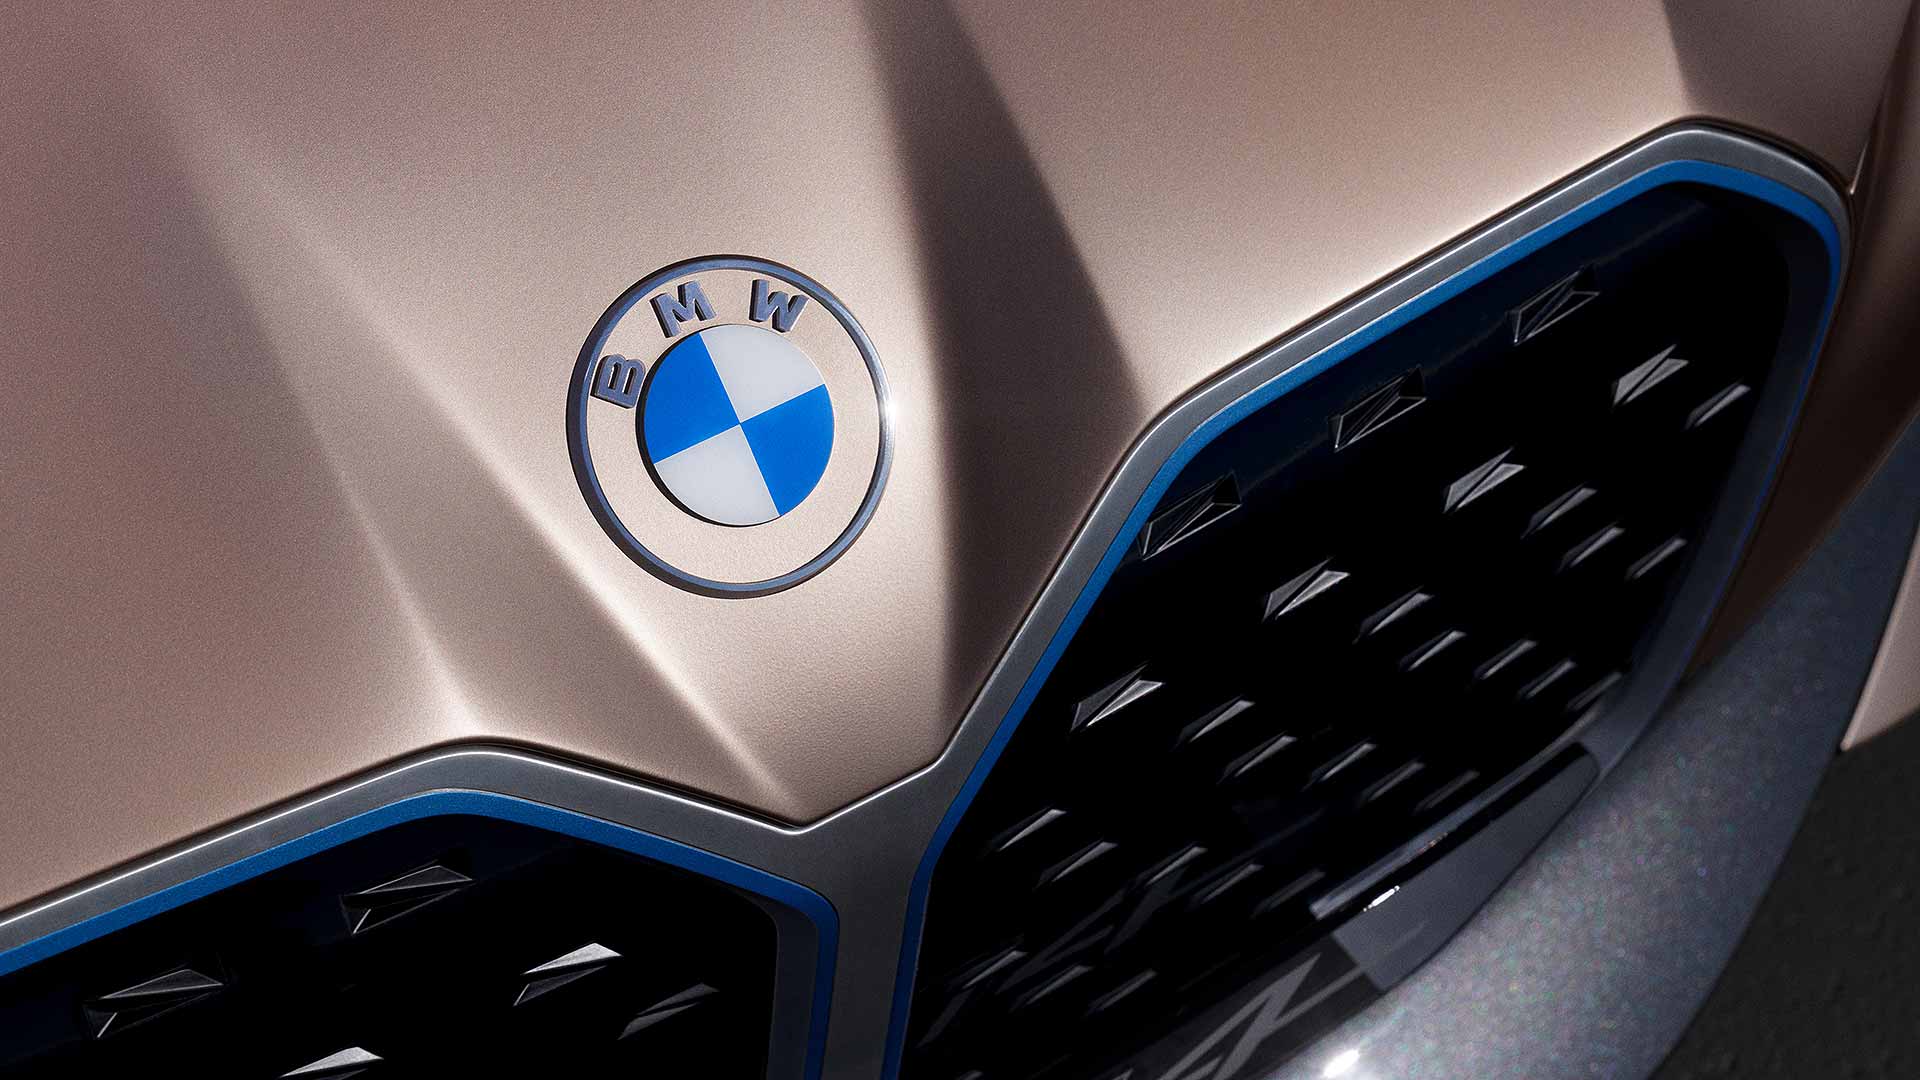 New BMW logo on Concept i4